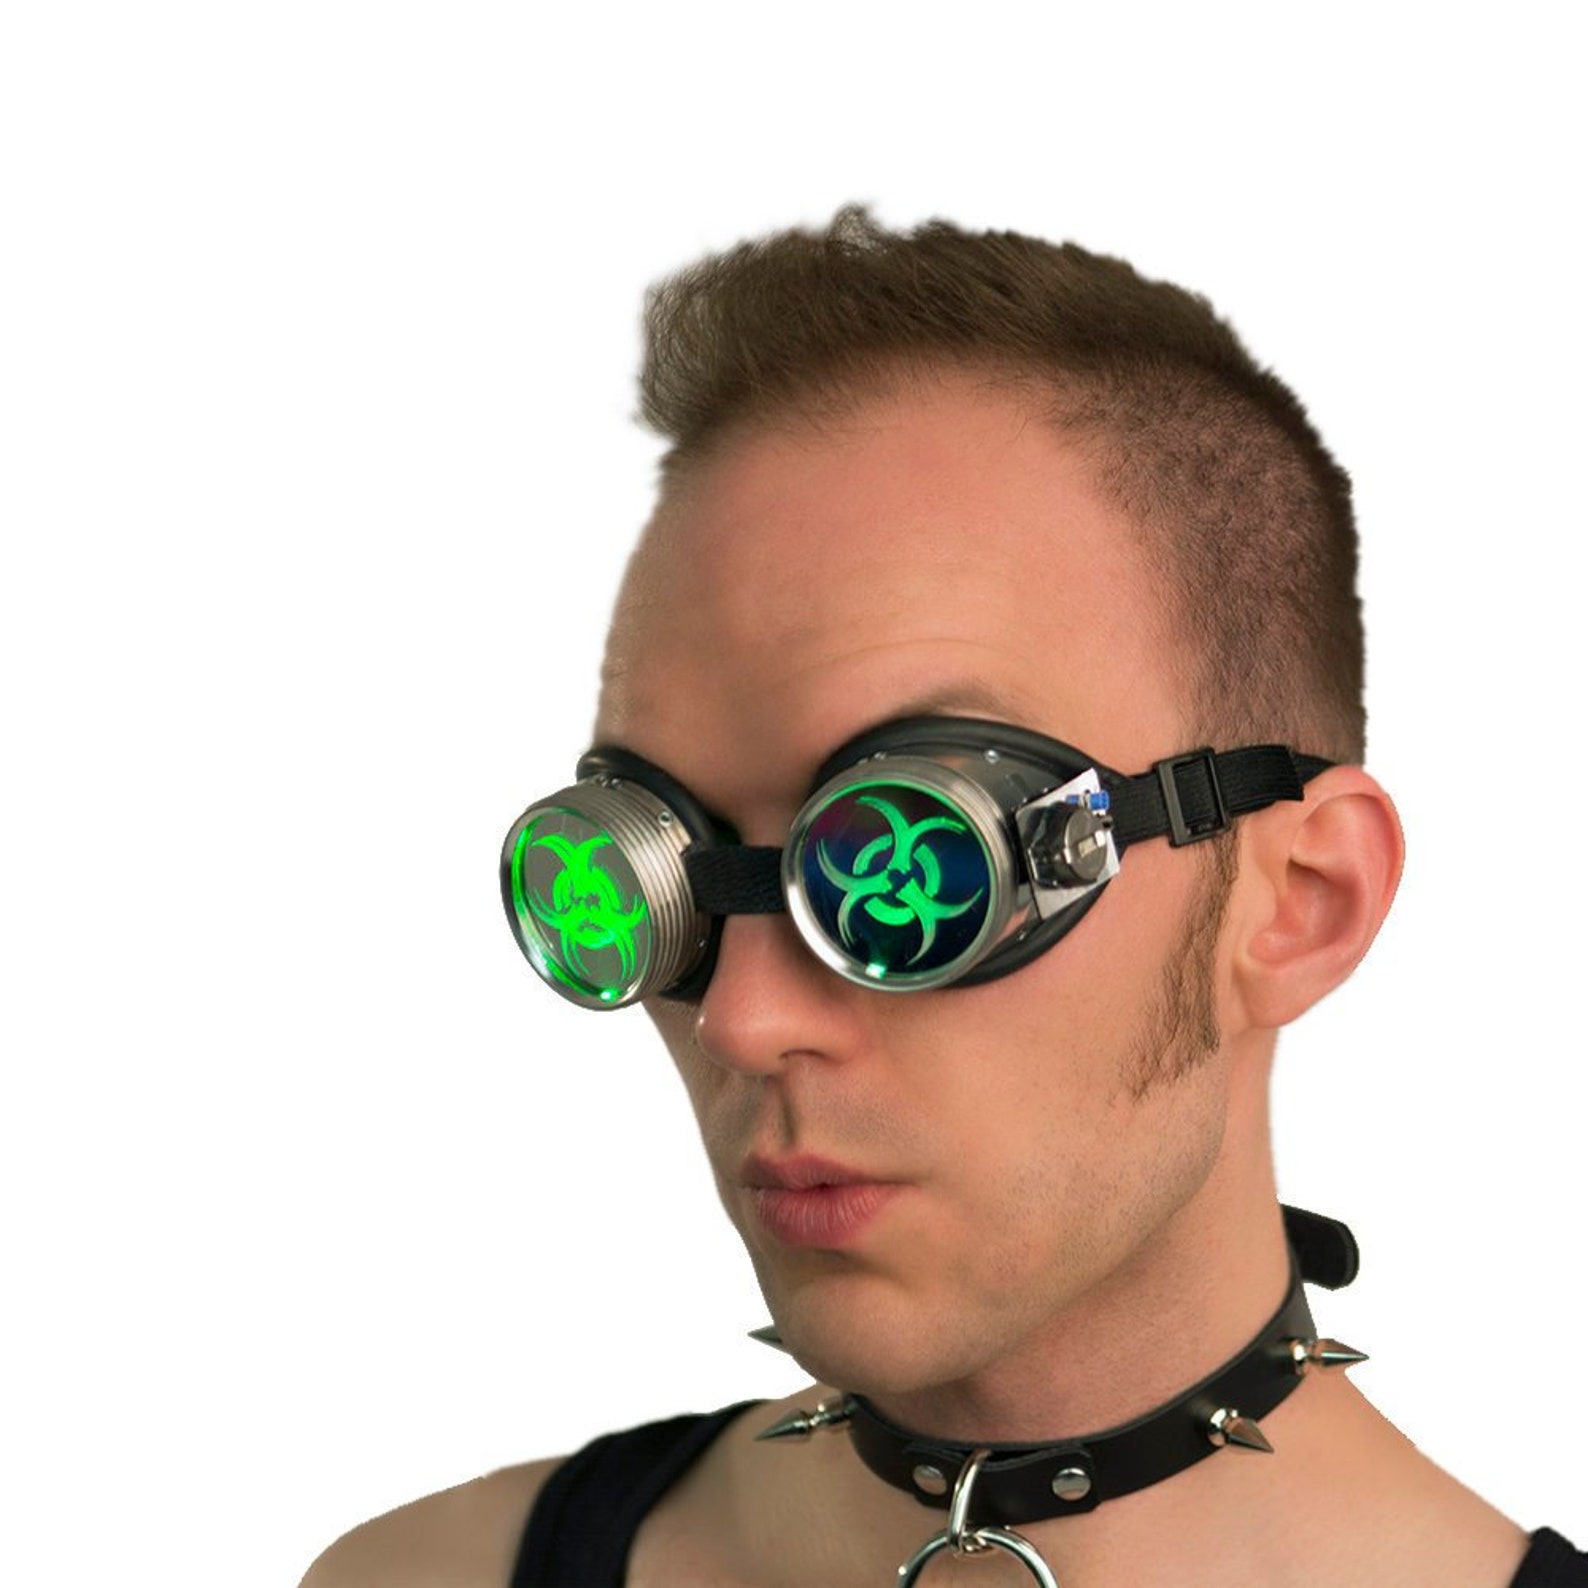 Cyberpunk style очки фото 34